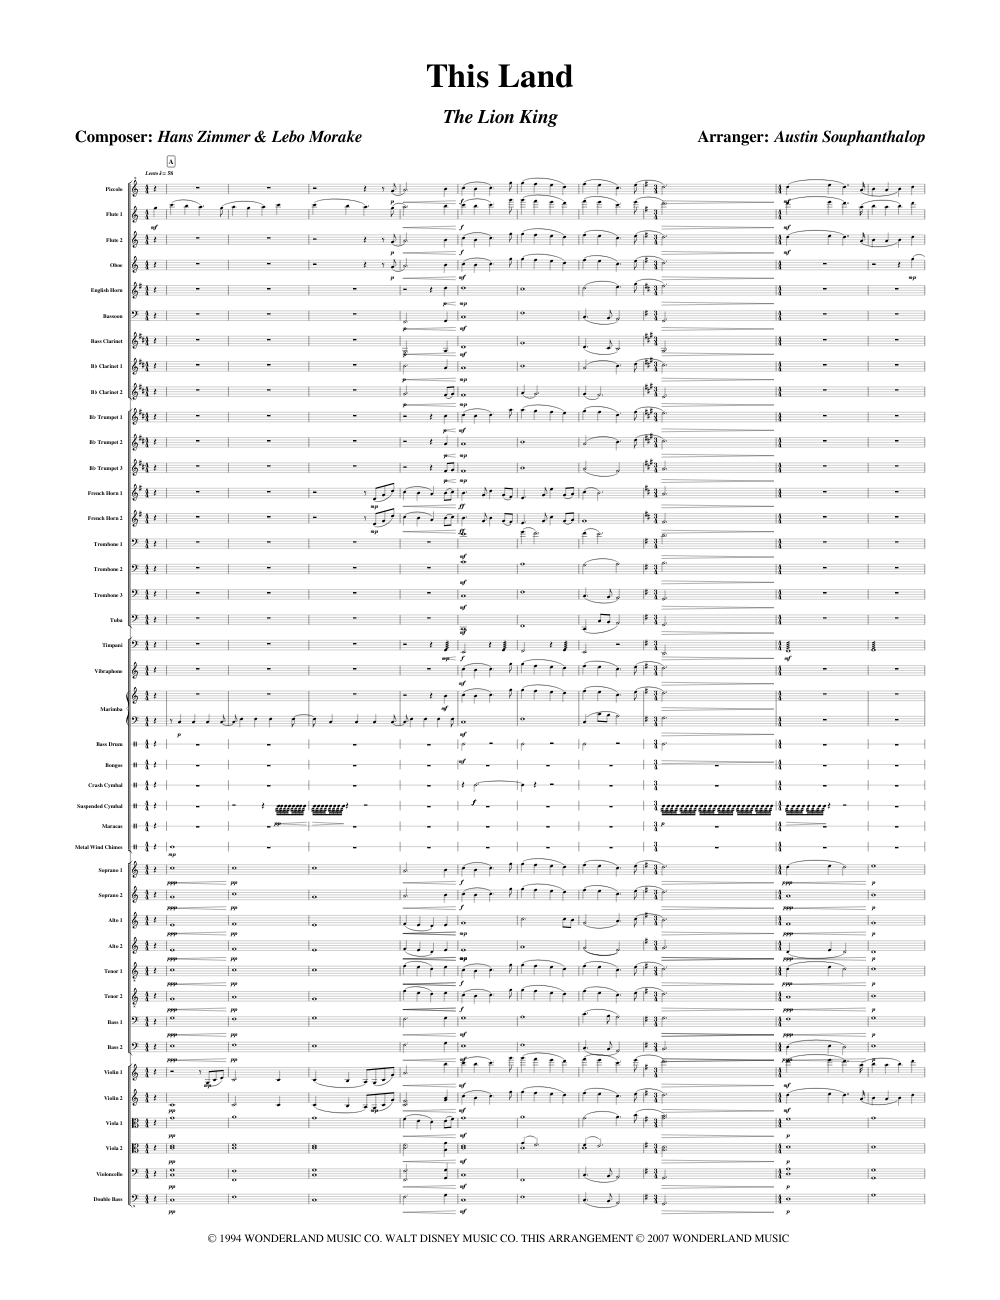 the lion king orchestral score pdf